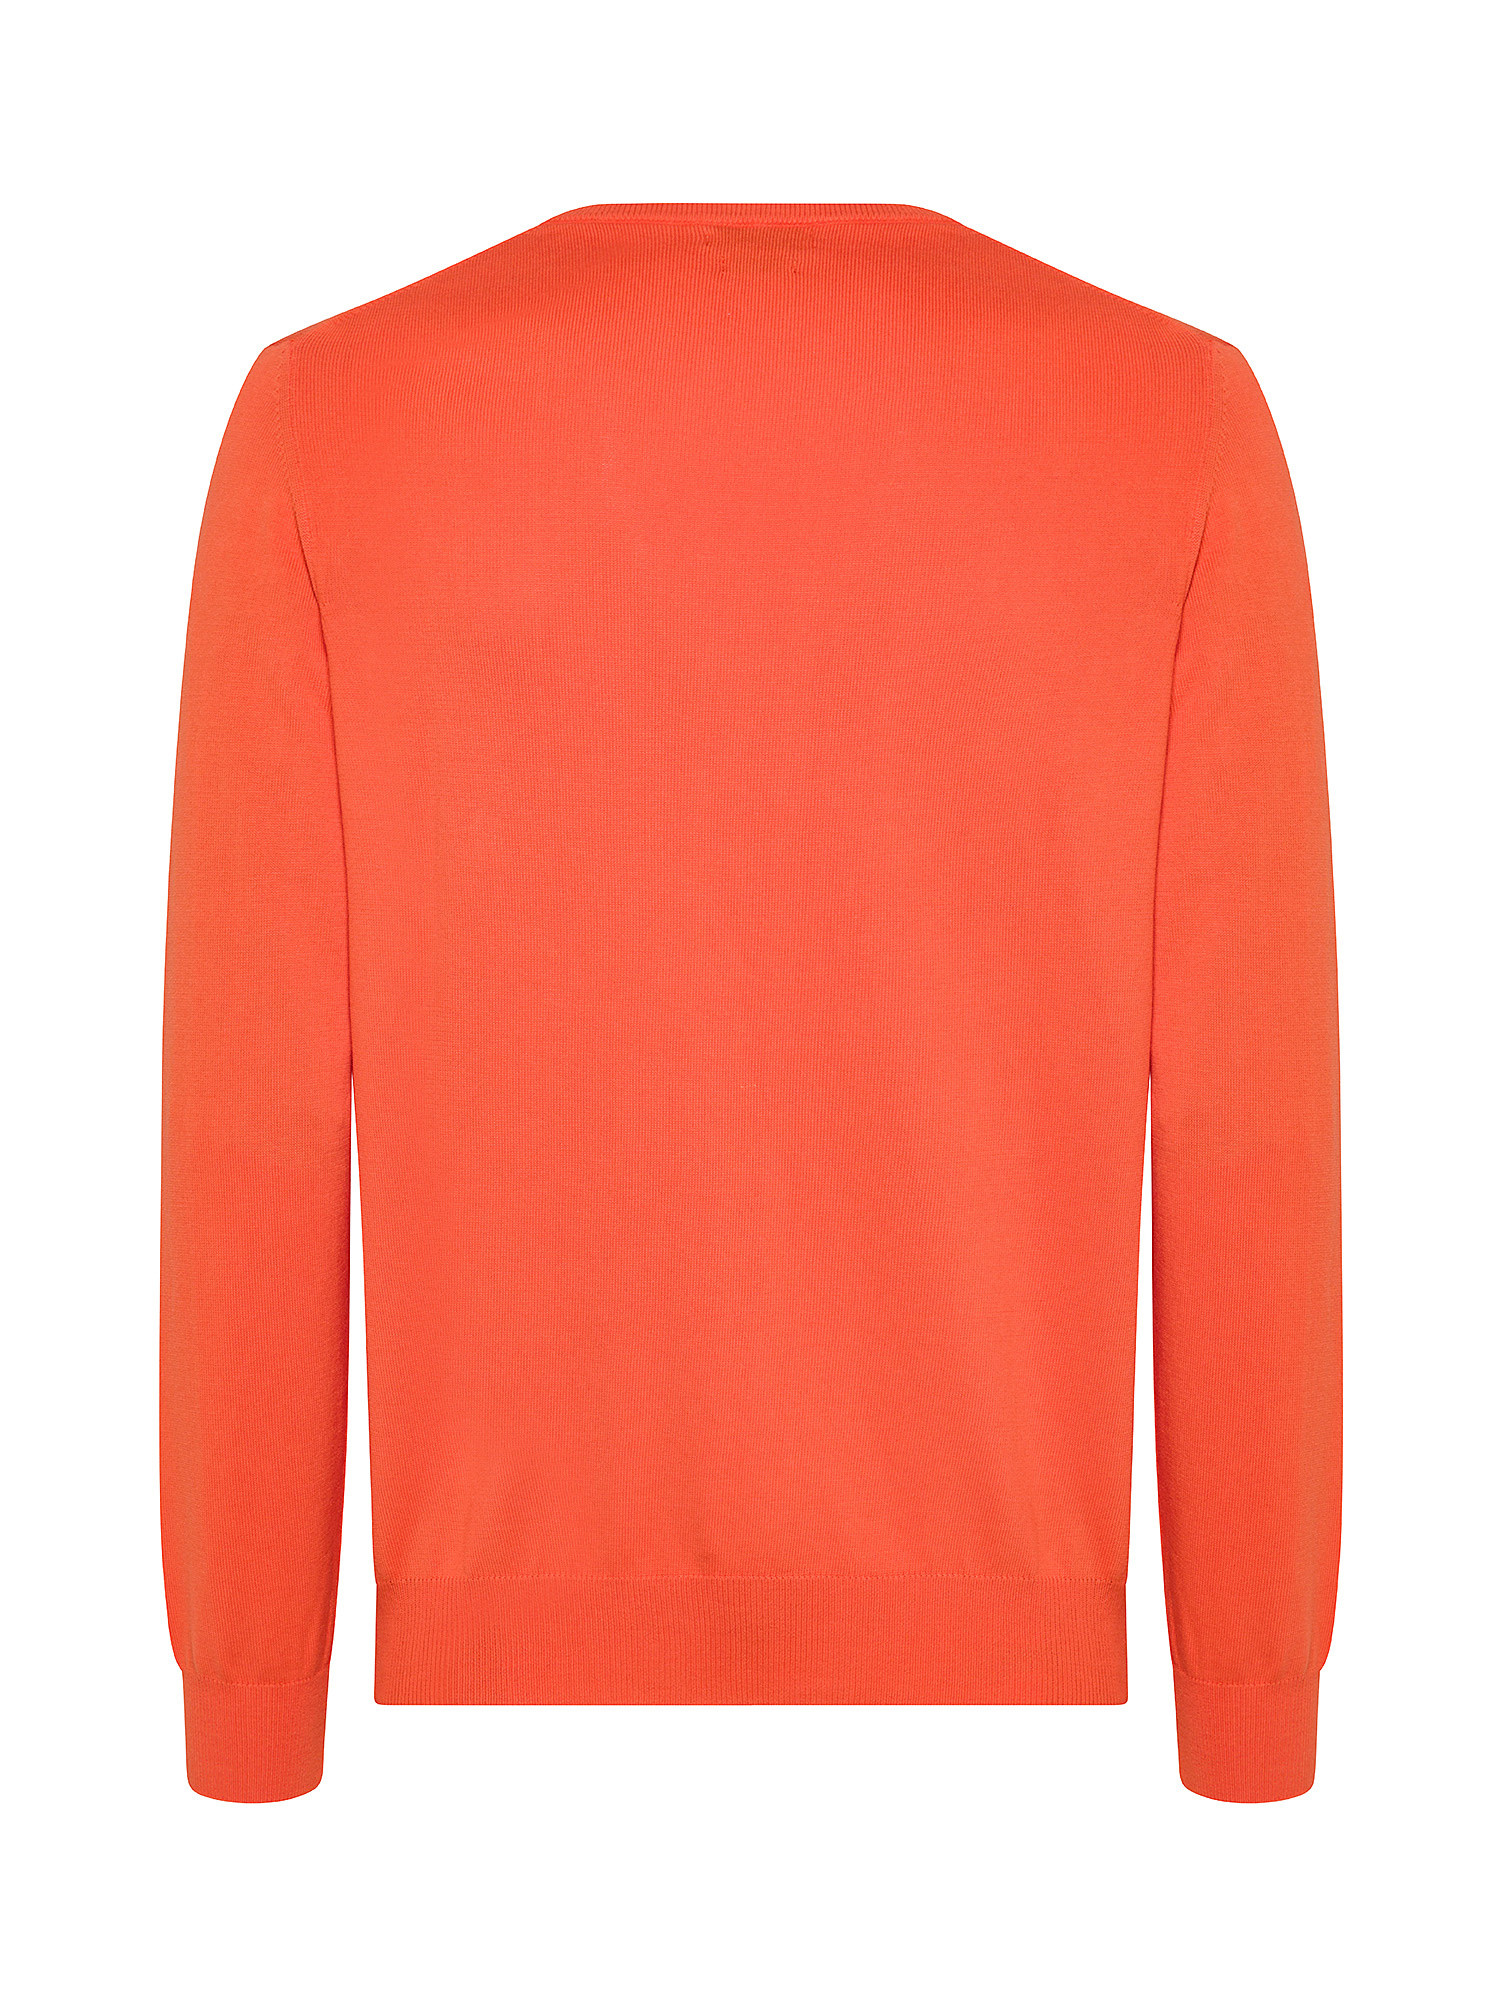 Luca D'Altieri - Crew neck sweater in extrafine pure cotton, Orange, large image number 1